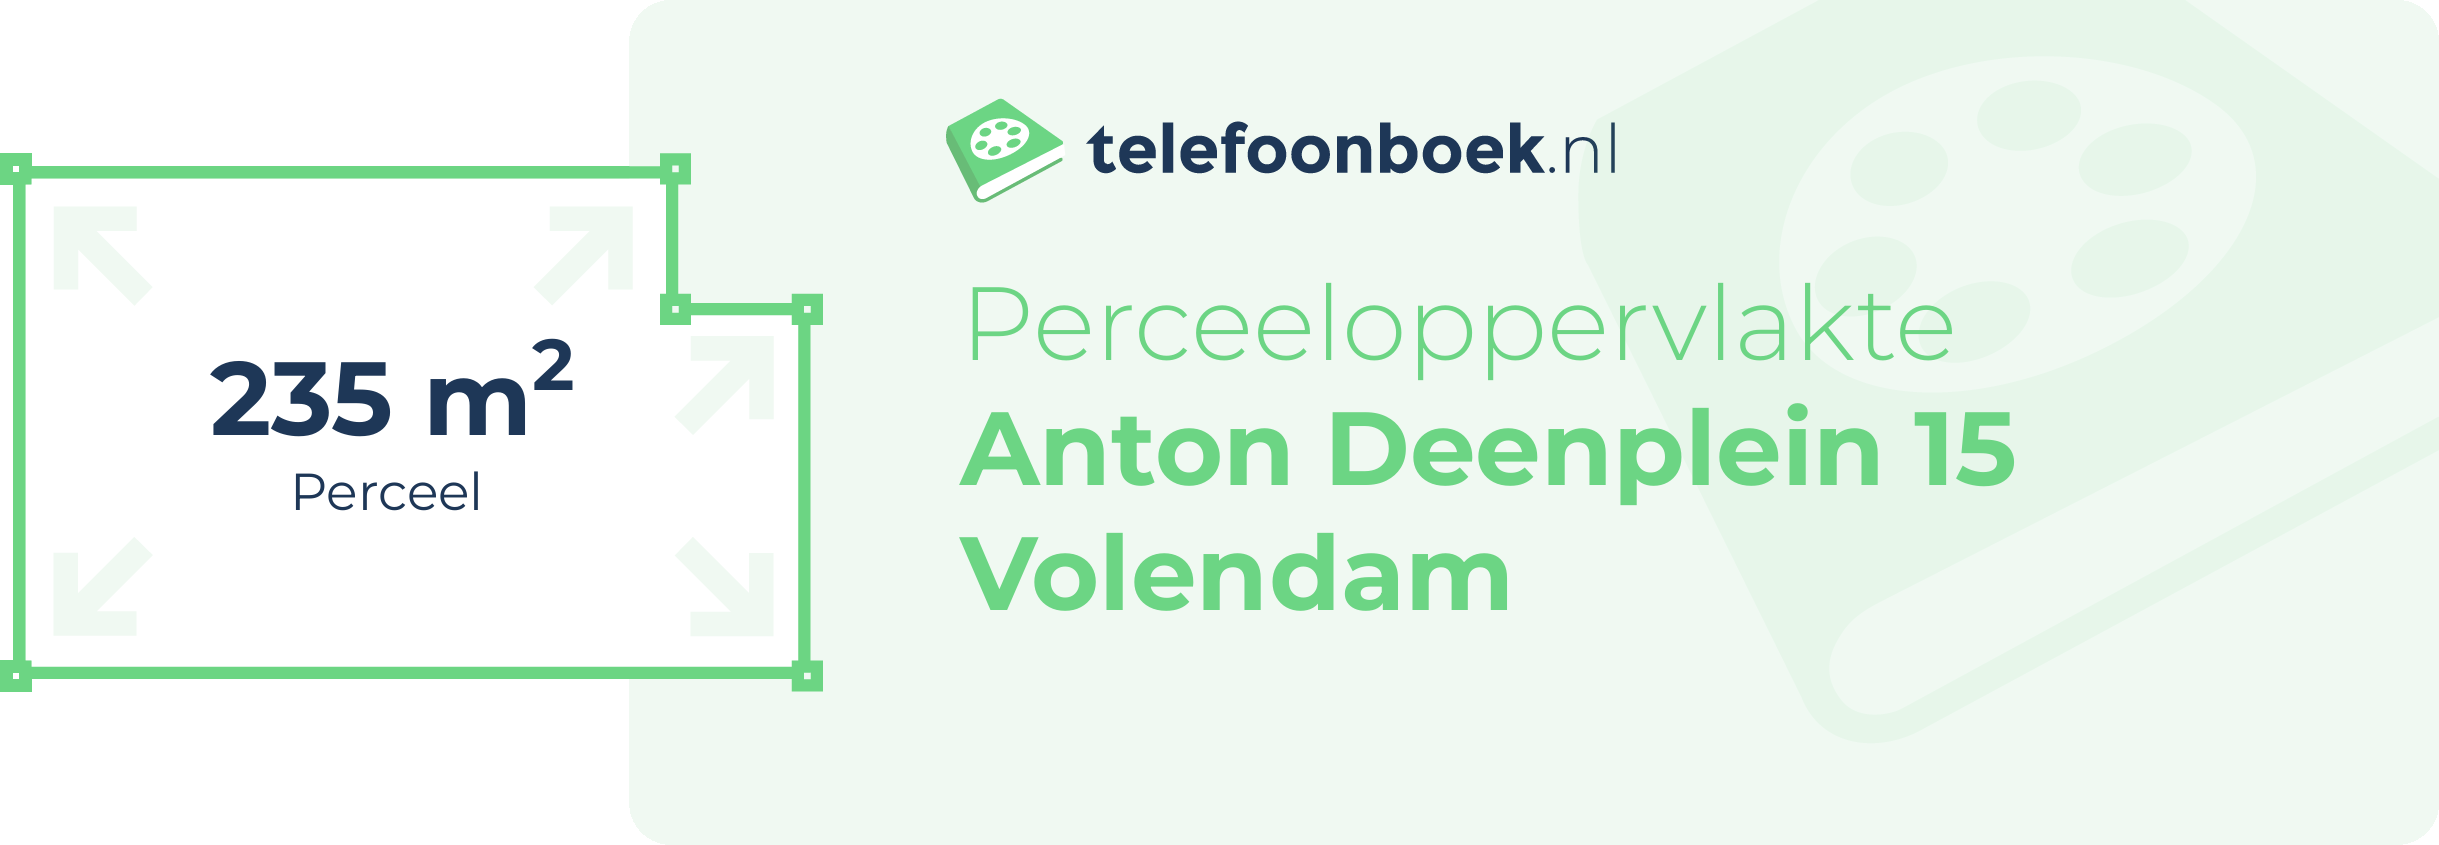 Perceeloppervlakte Anton Deenplein 15 Volendam